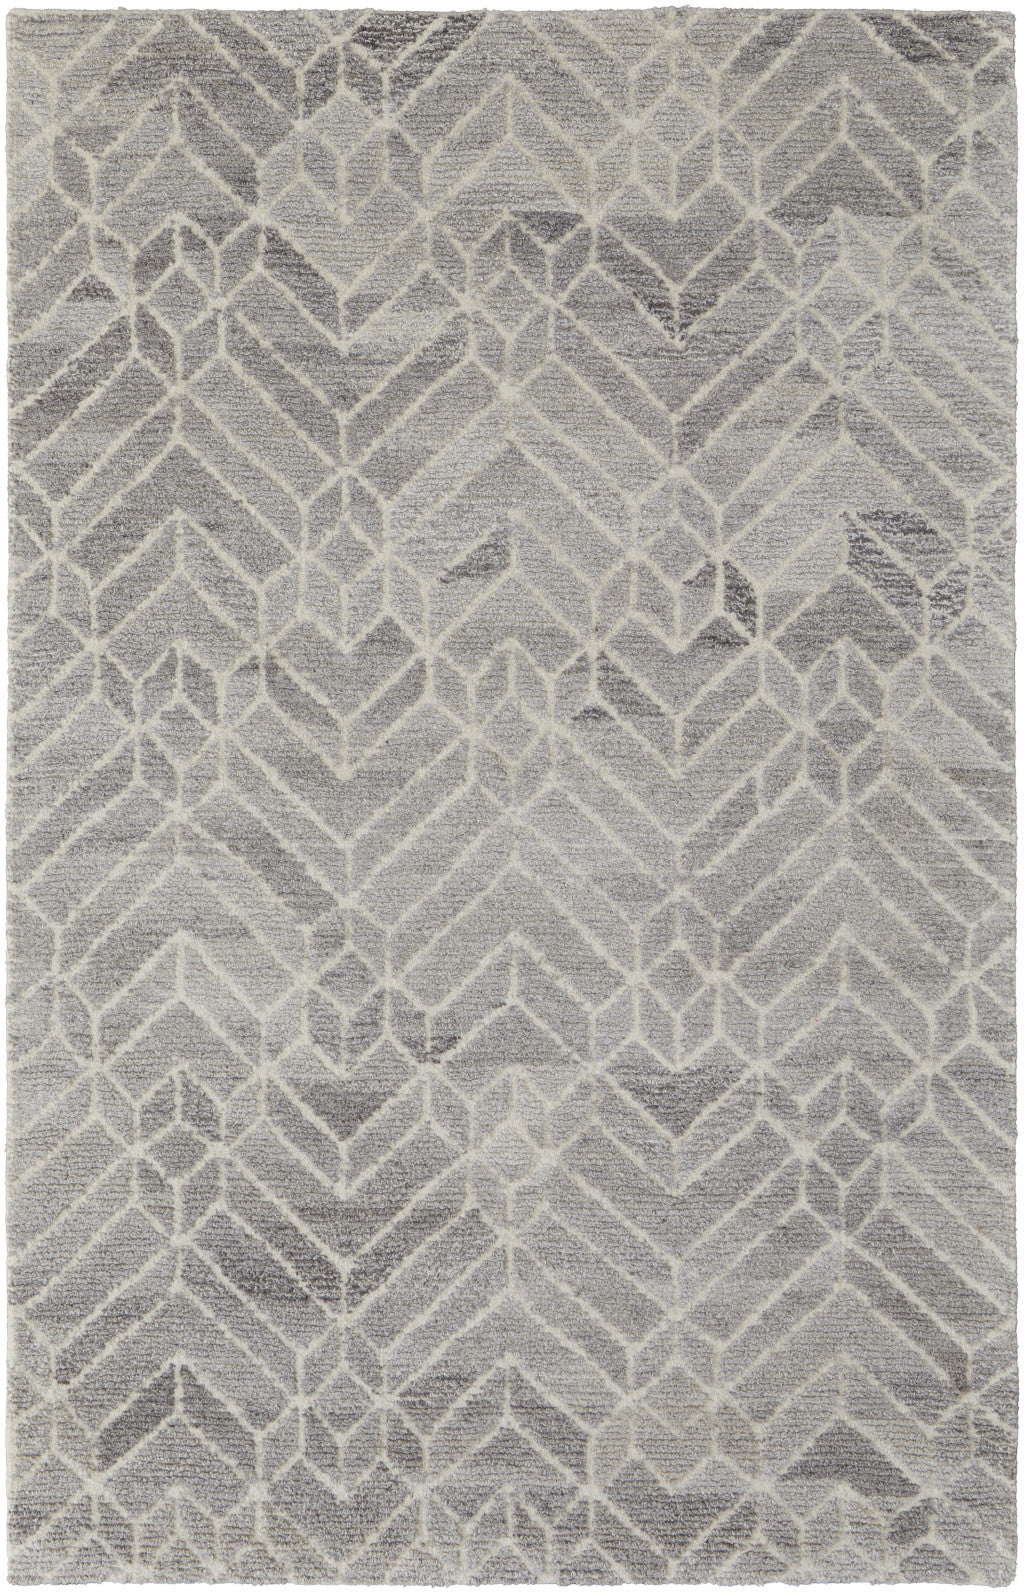 4' X 6' Taupe Gray And Ivory Wool Geometric Tufted Handmade Area Rug